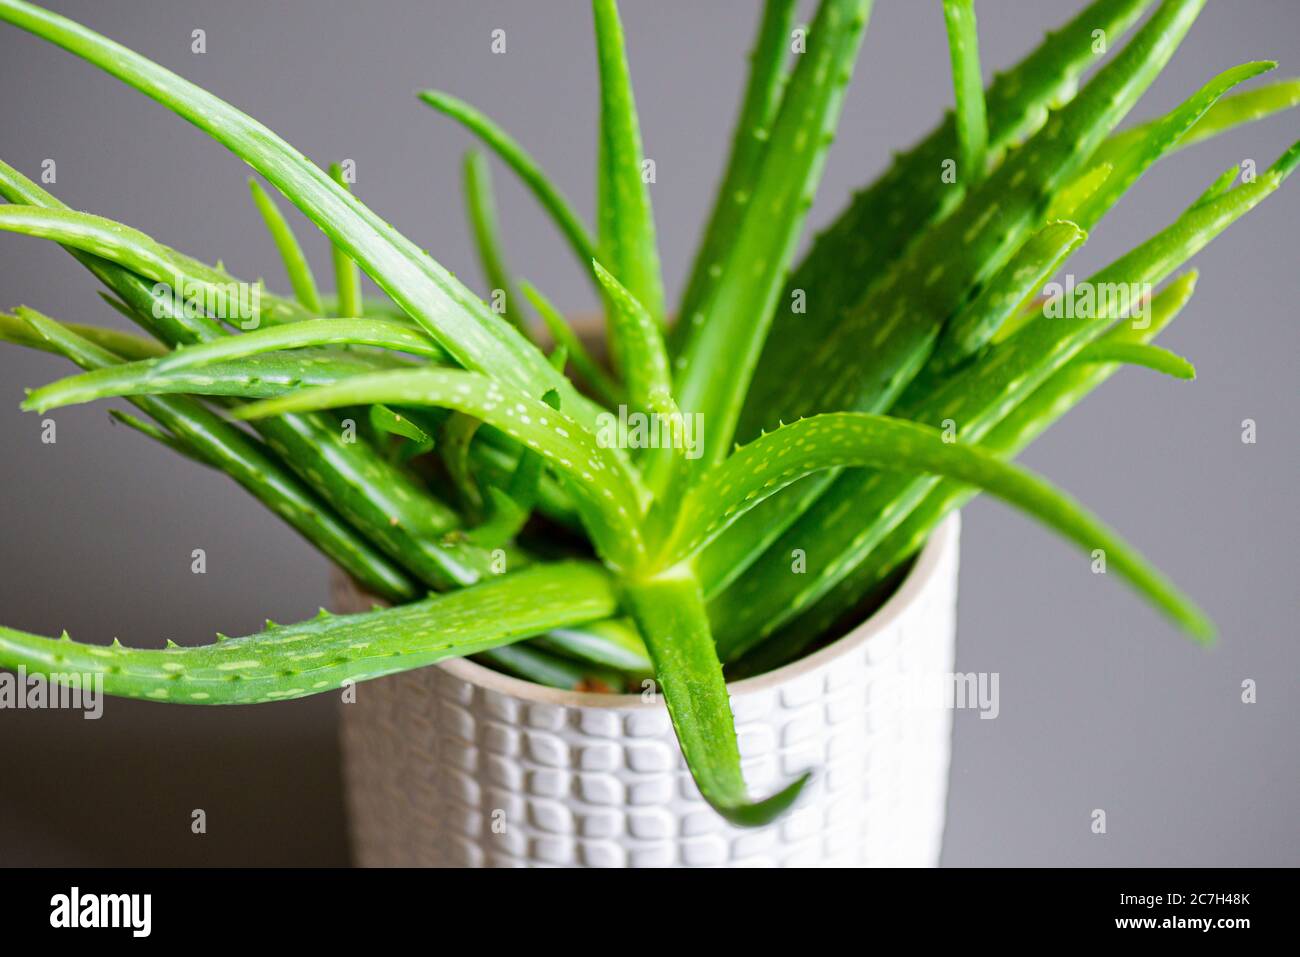 An Aloe vera grown in a pot as a house plant Stock Photo